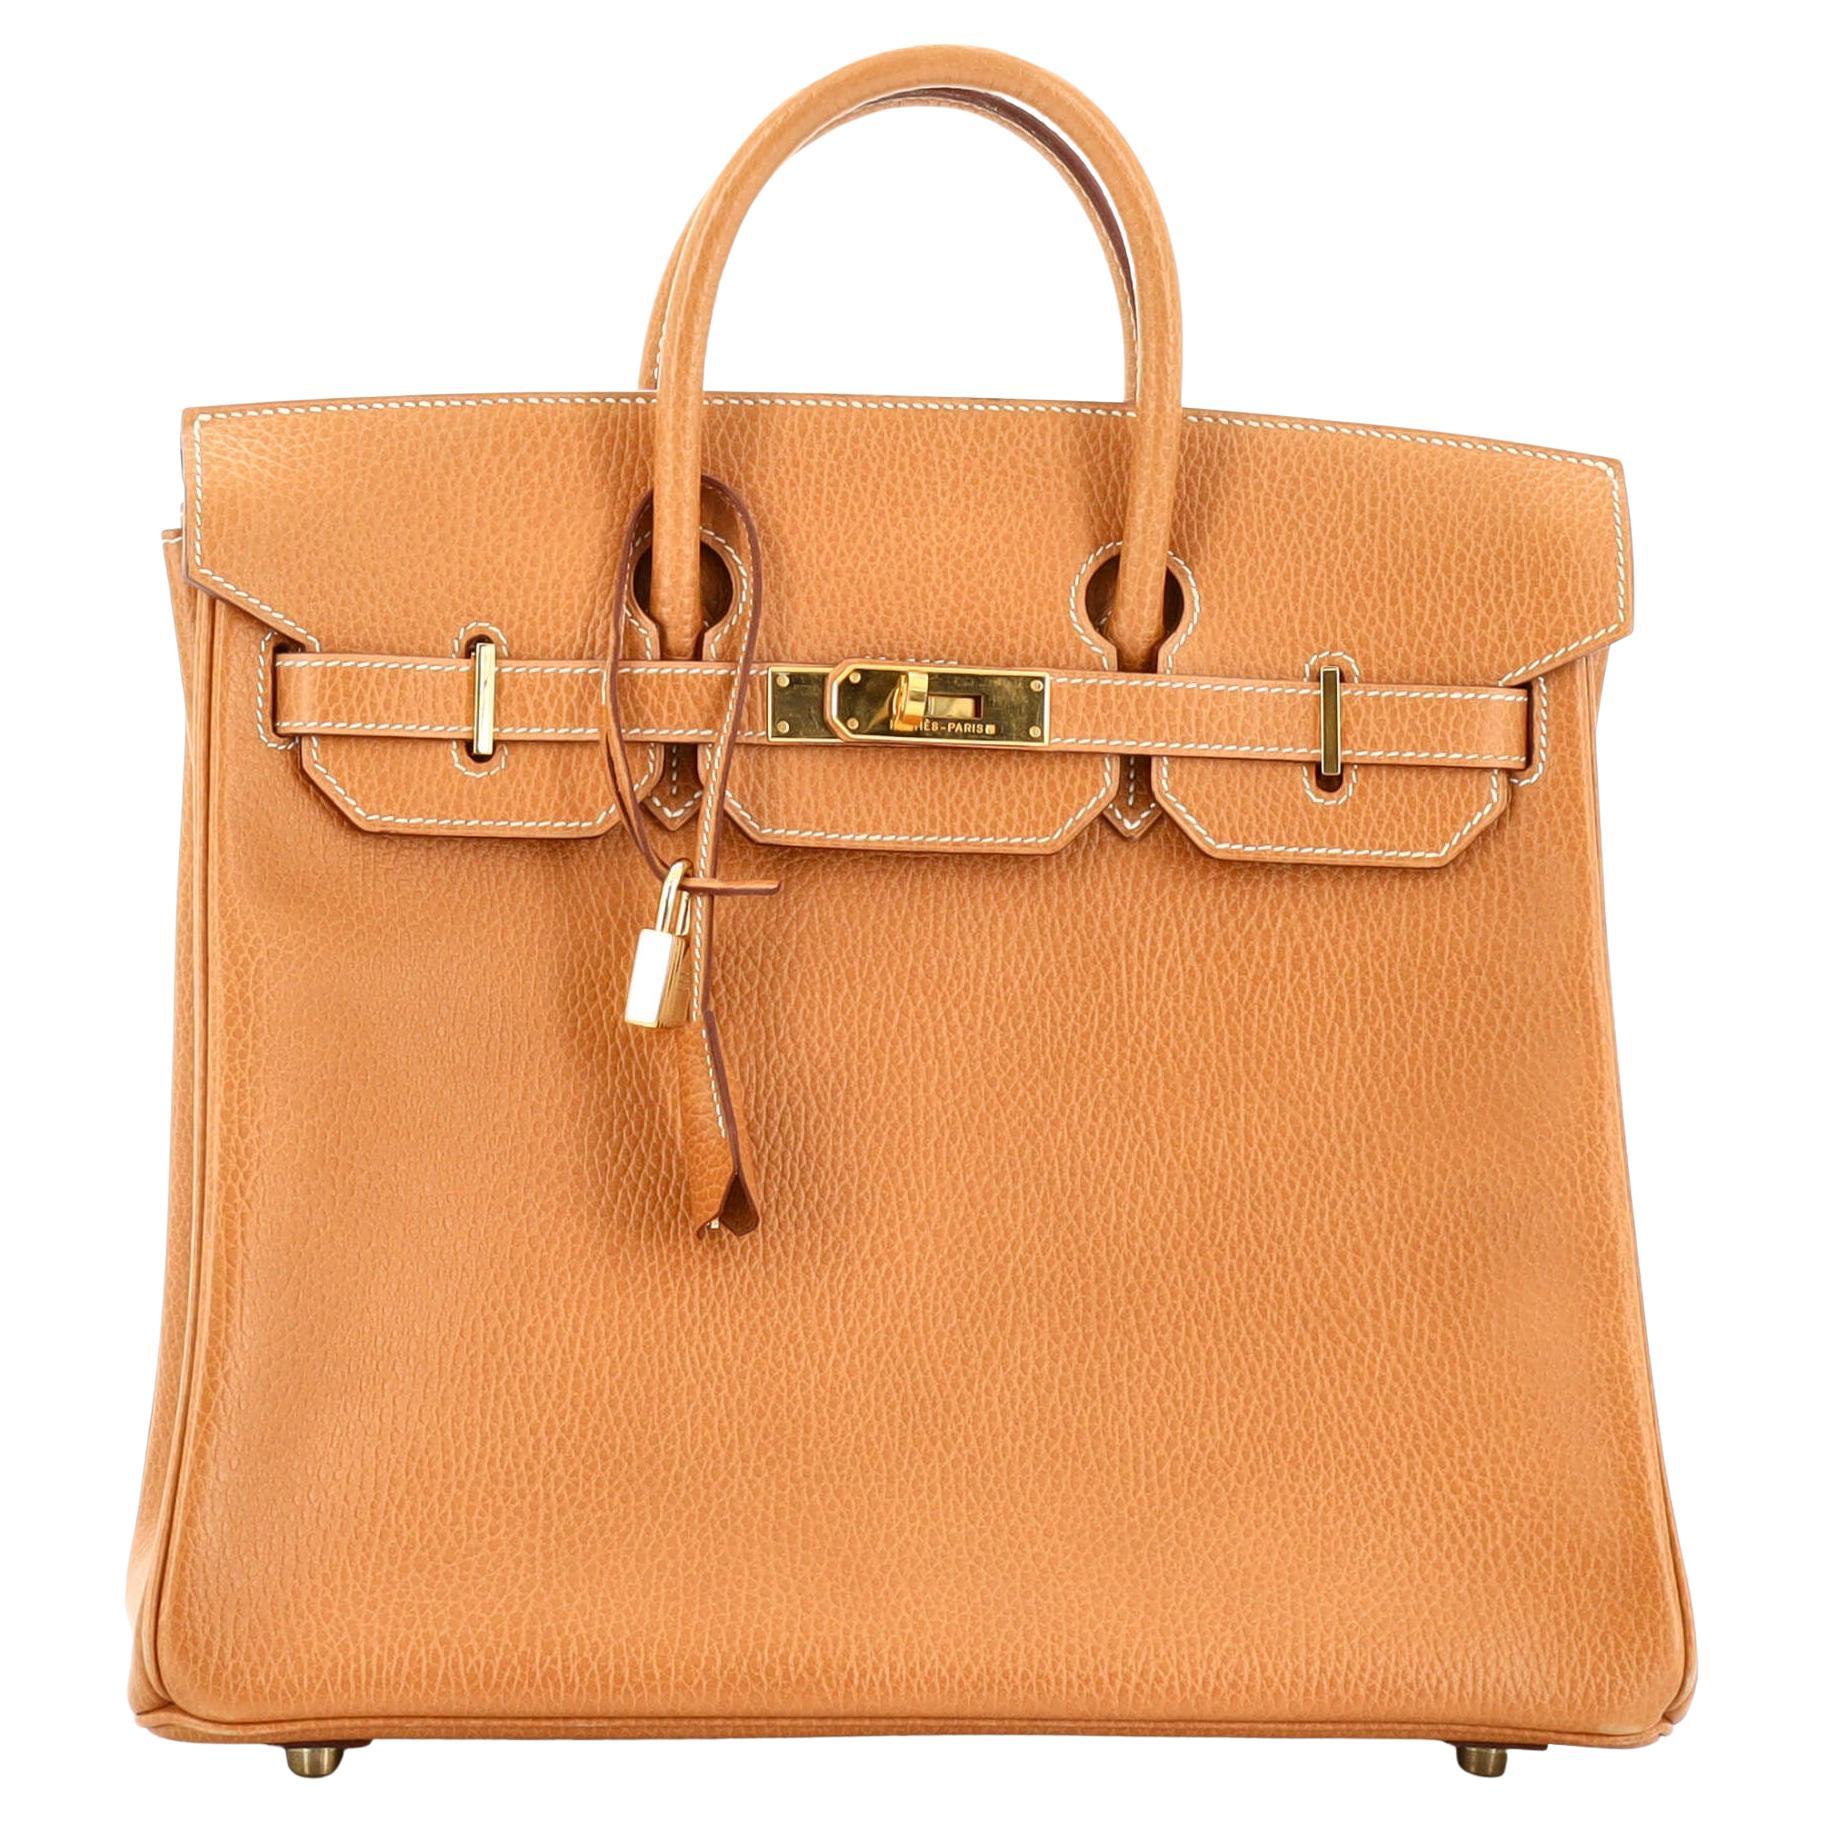 Hermès Birkin Bags For Sale